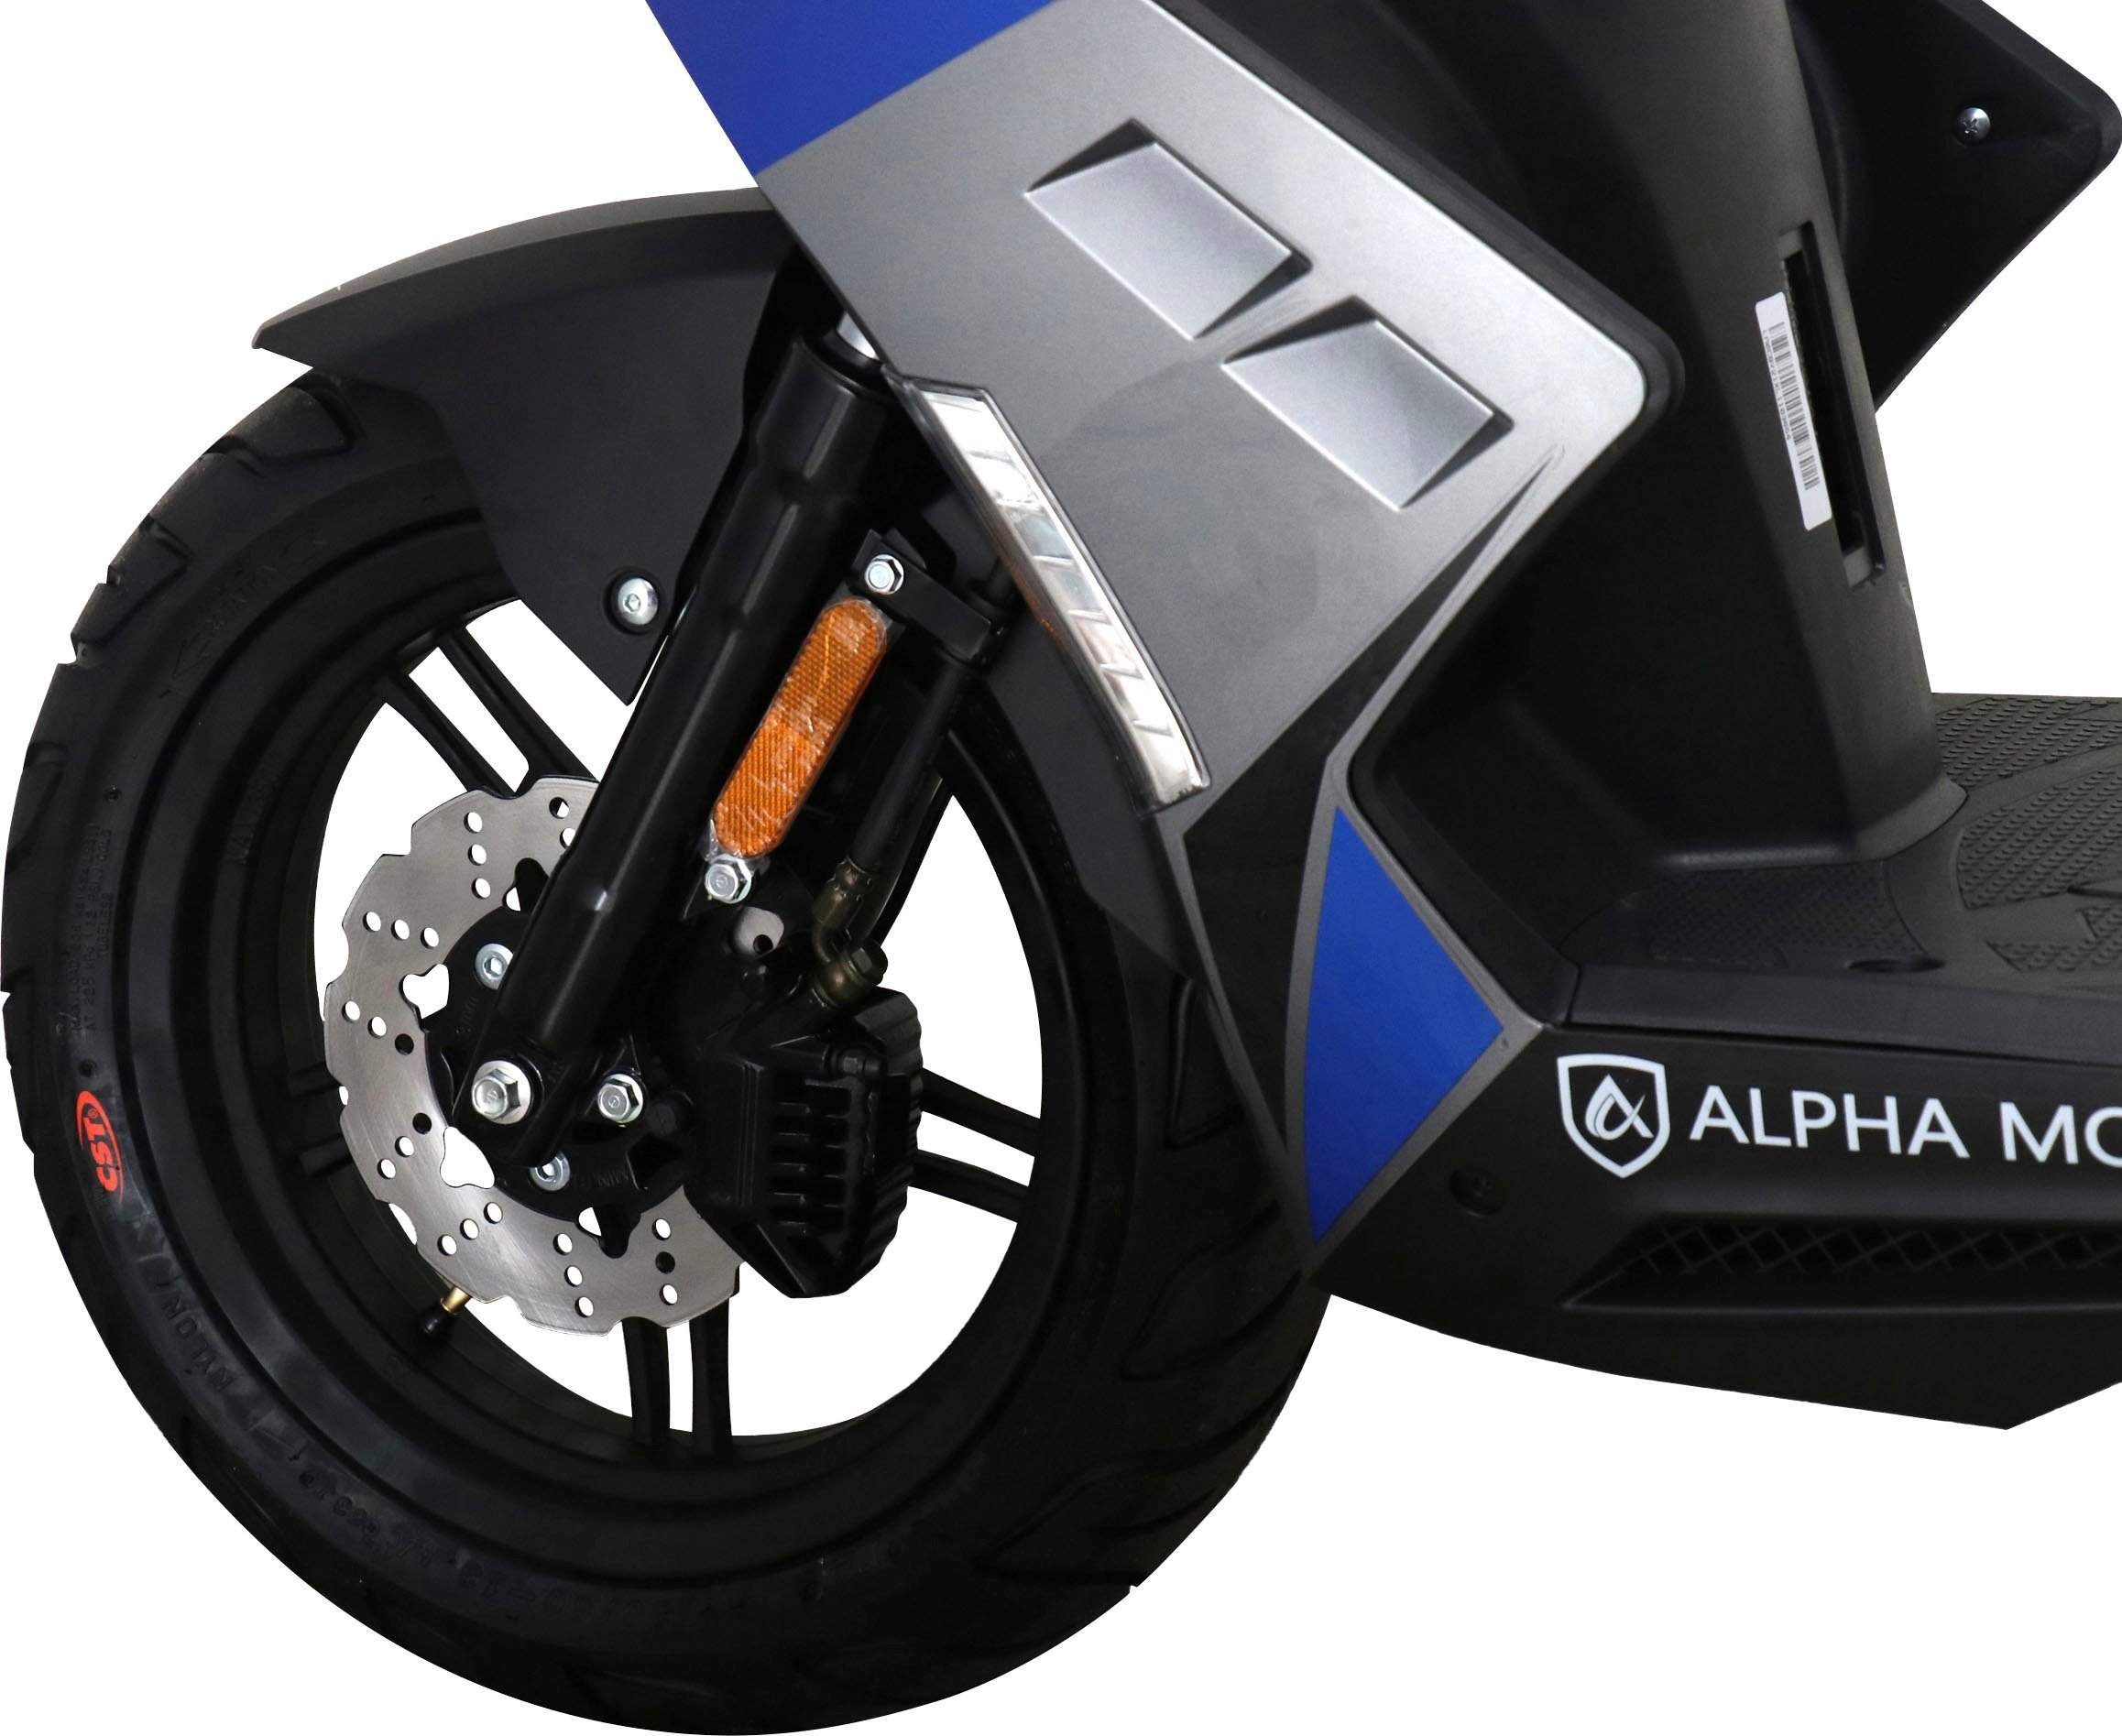 Alpha Motors 50 Mustang FI, blau-grau 45 km/h, Motorroller 5 ccm, Euro